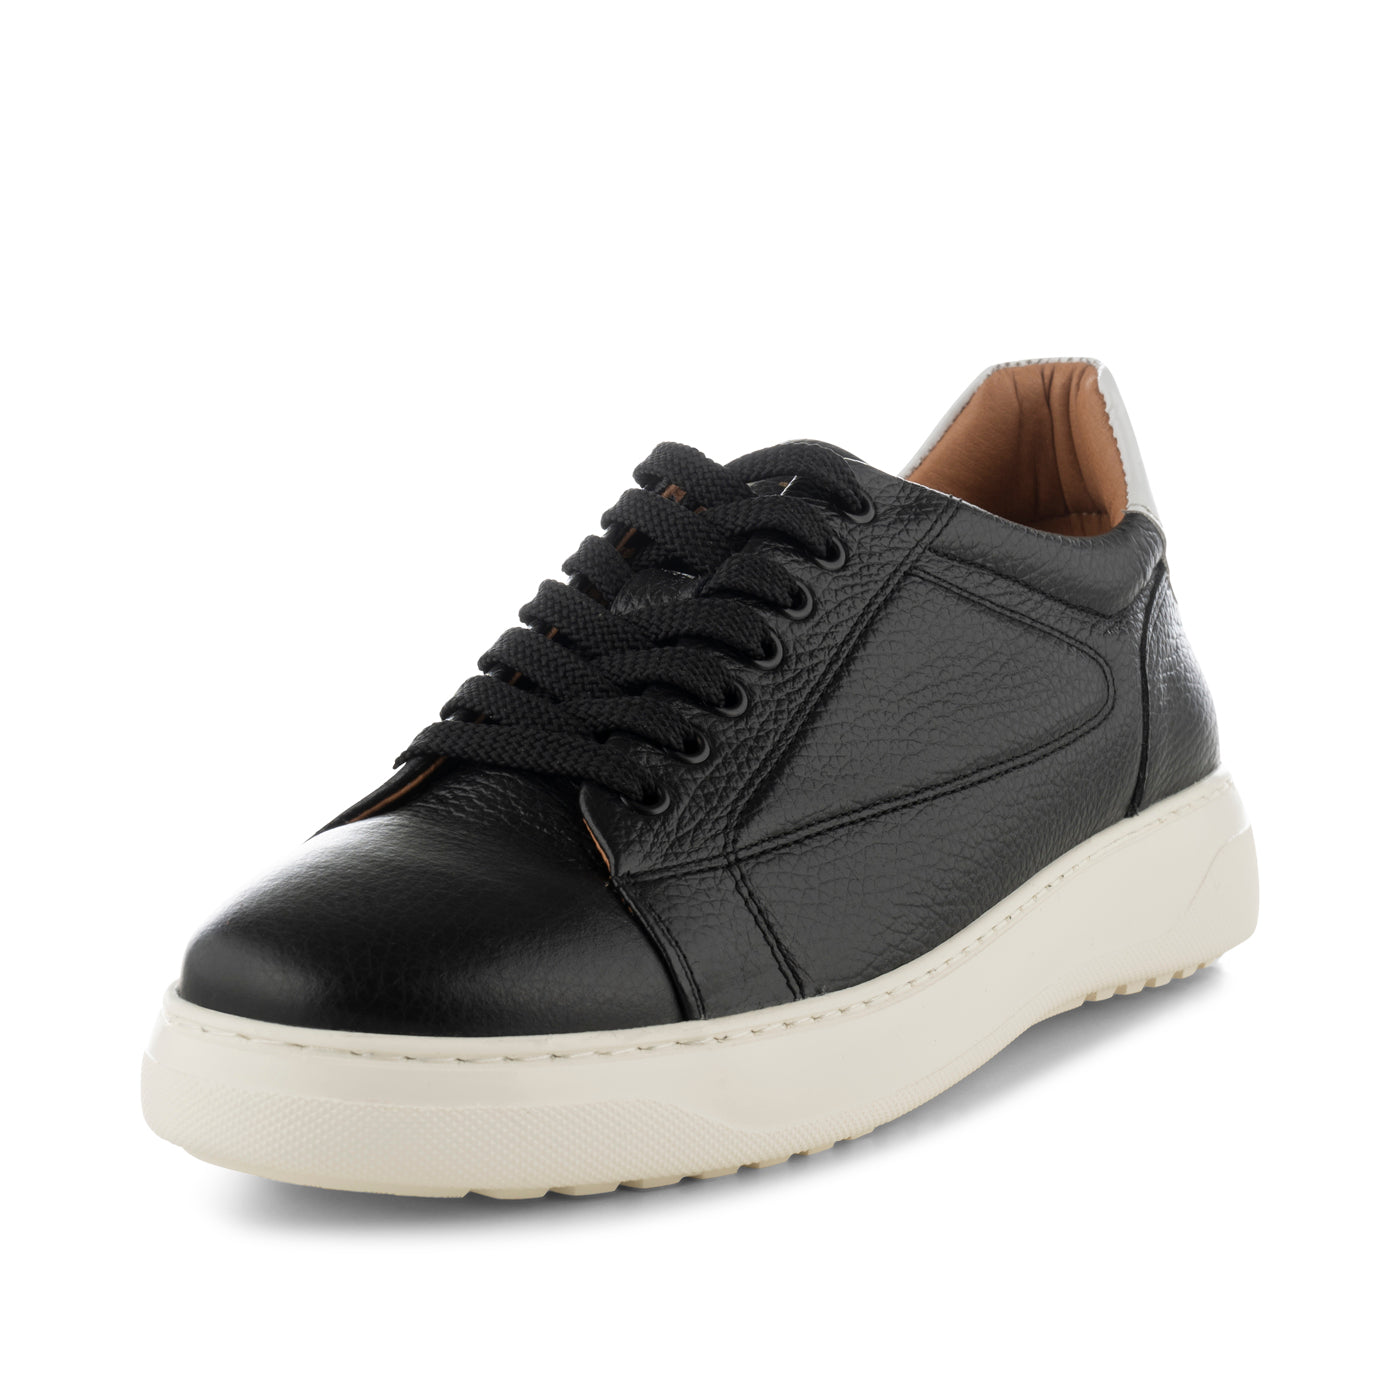 Rune sneaker leather - BLACK / – THE COM